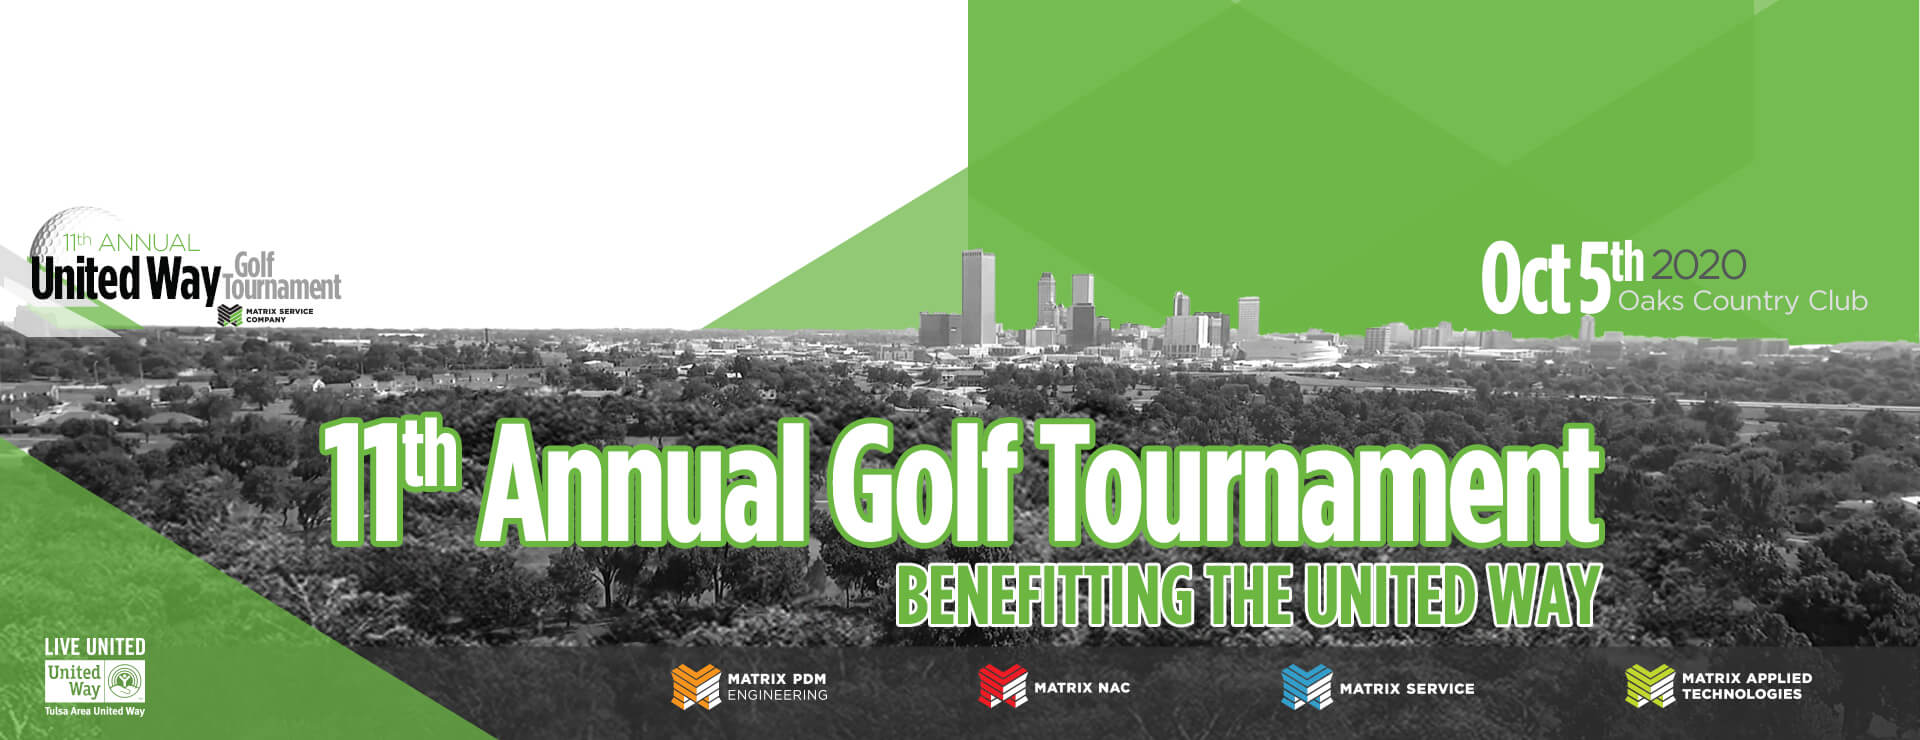 11th annual Matrix Golf Tournament benefitting the United Way